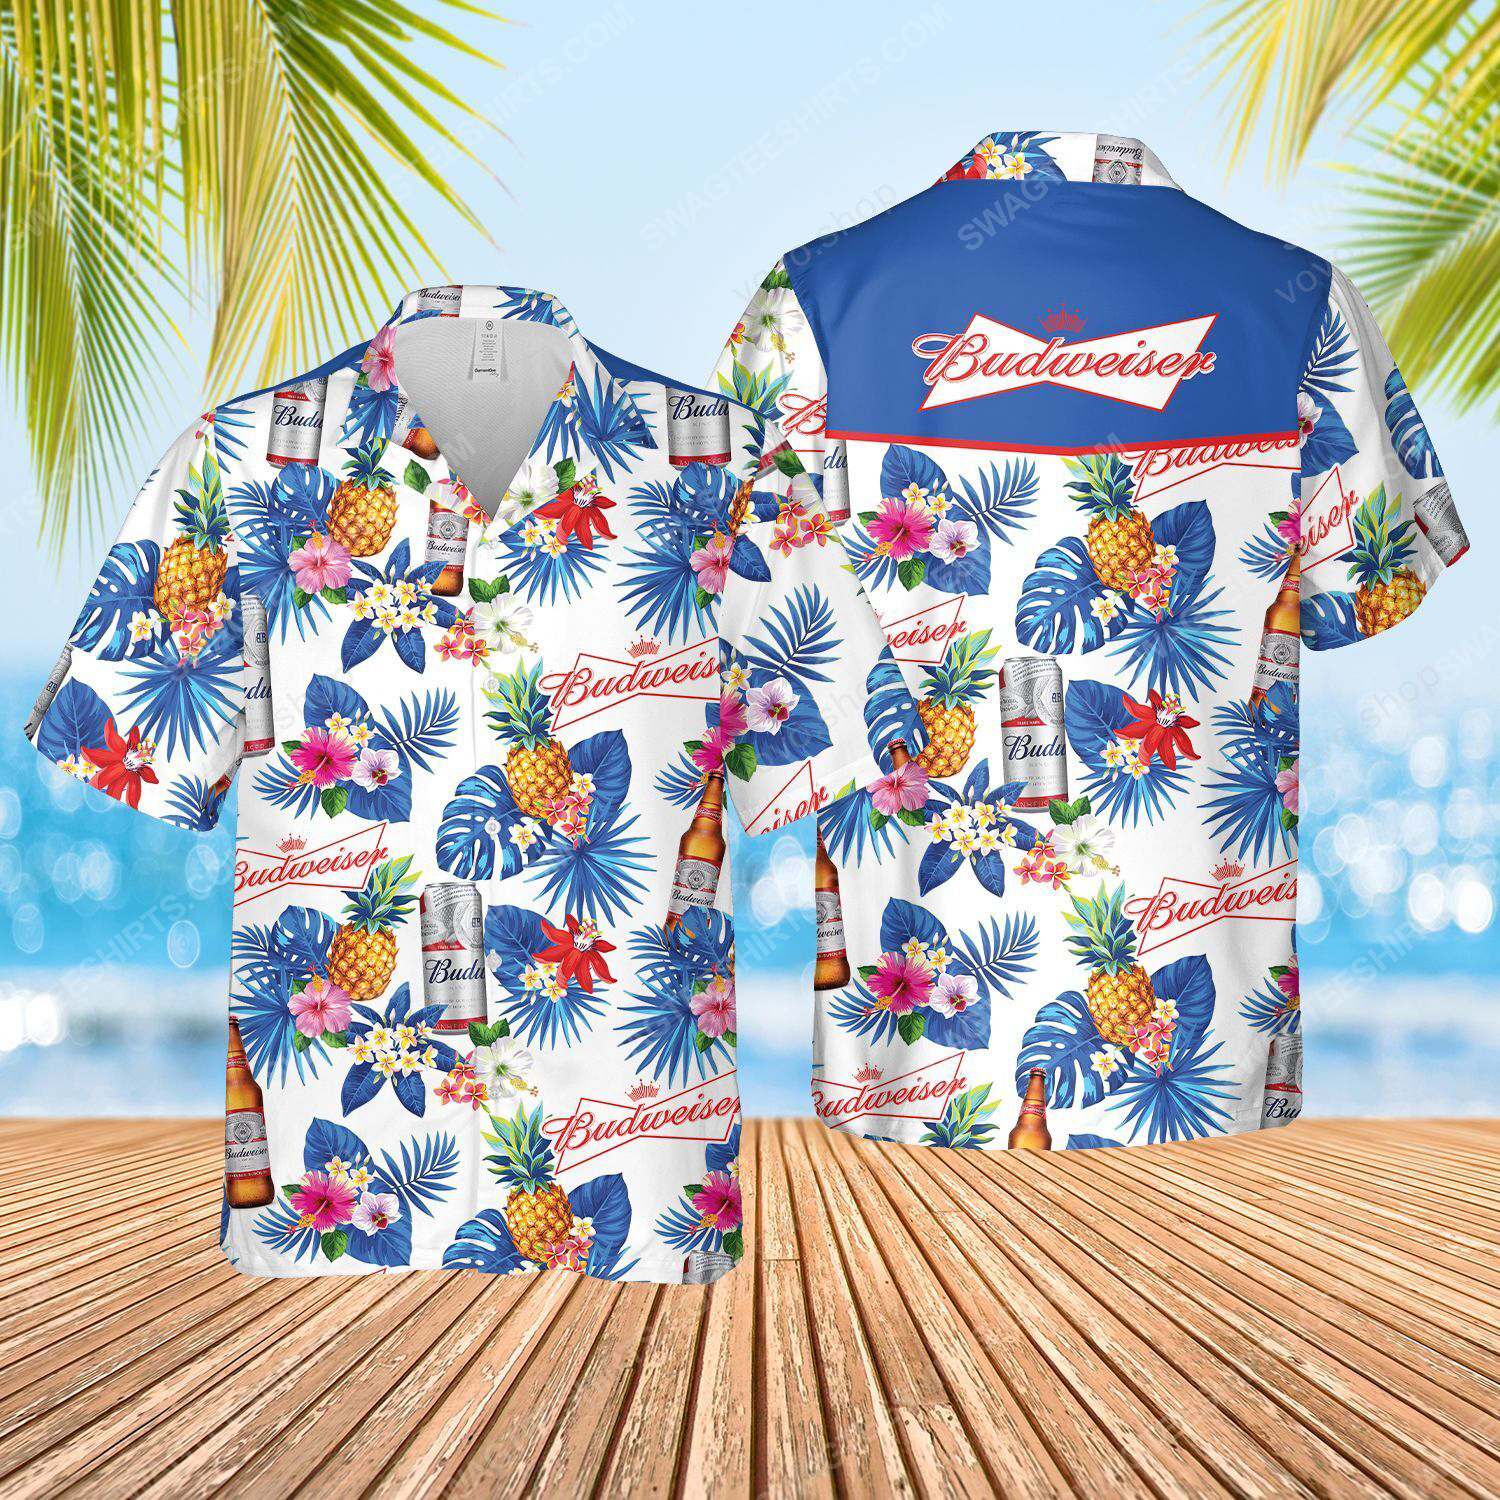 [special edition] Tropical budweiser beer full printed hawaiian shirt- maria